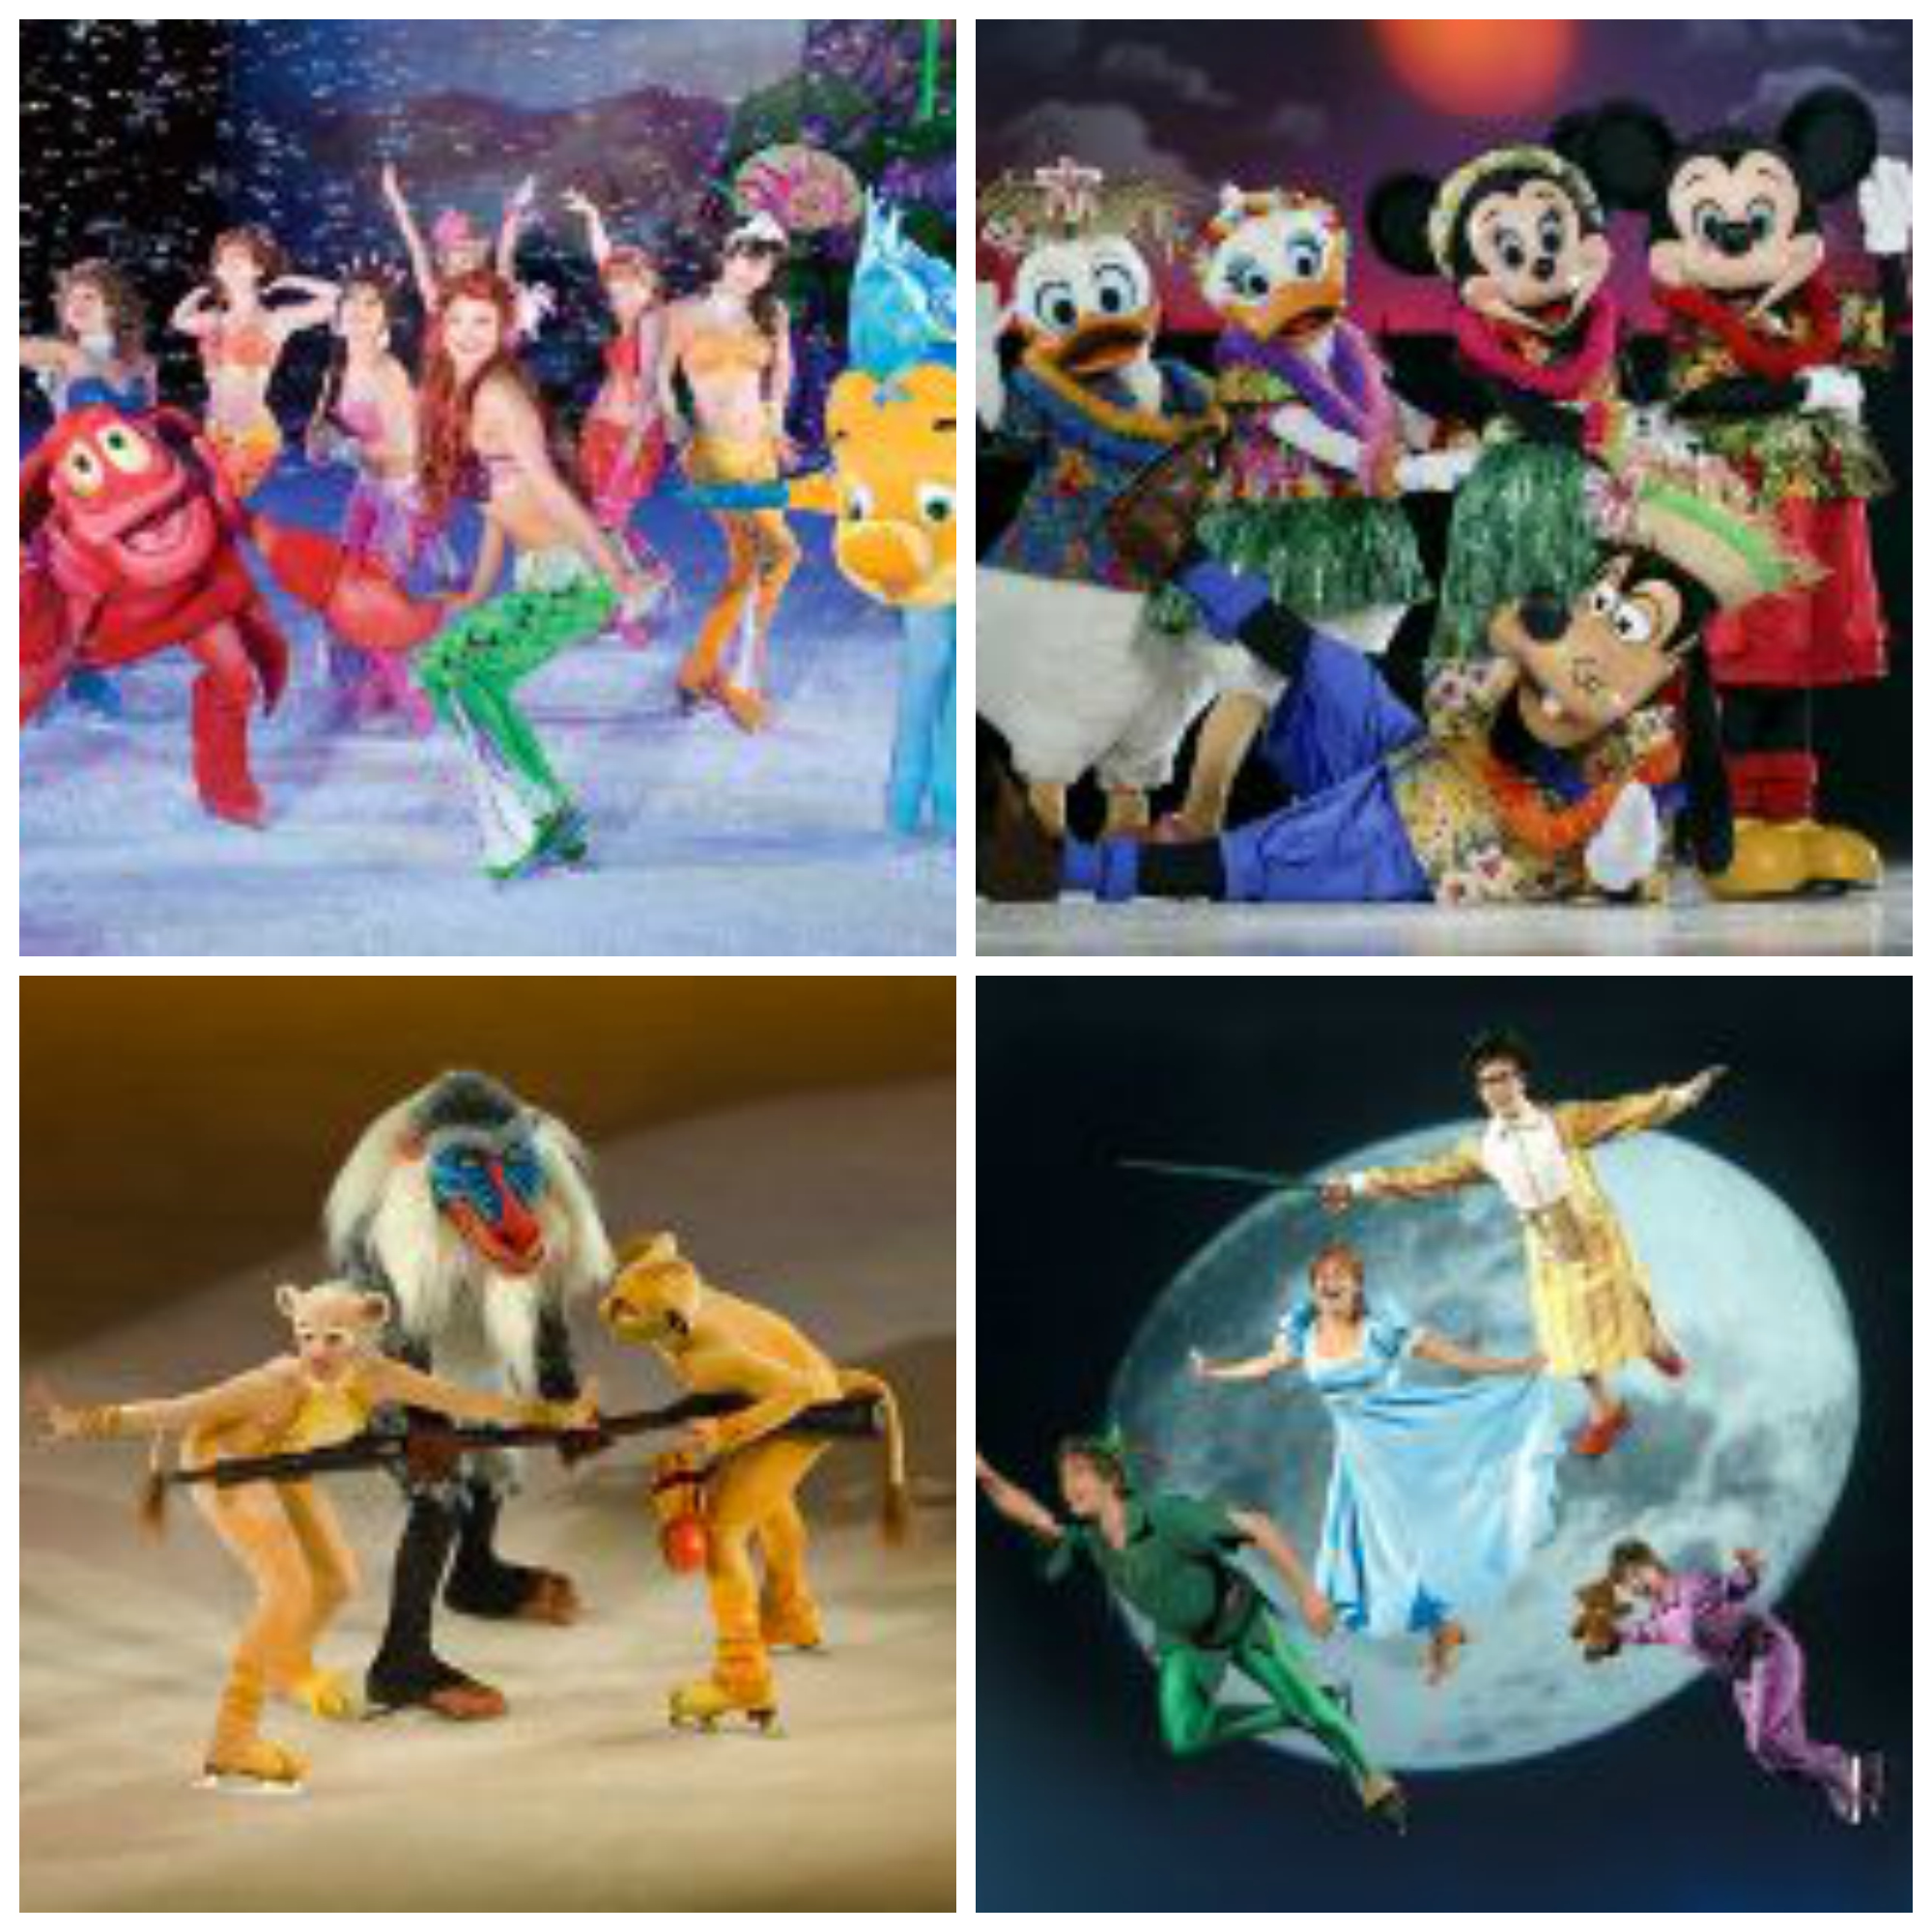 Disney on Ice Passport to Adventure coming to Xcel Dec. 12